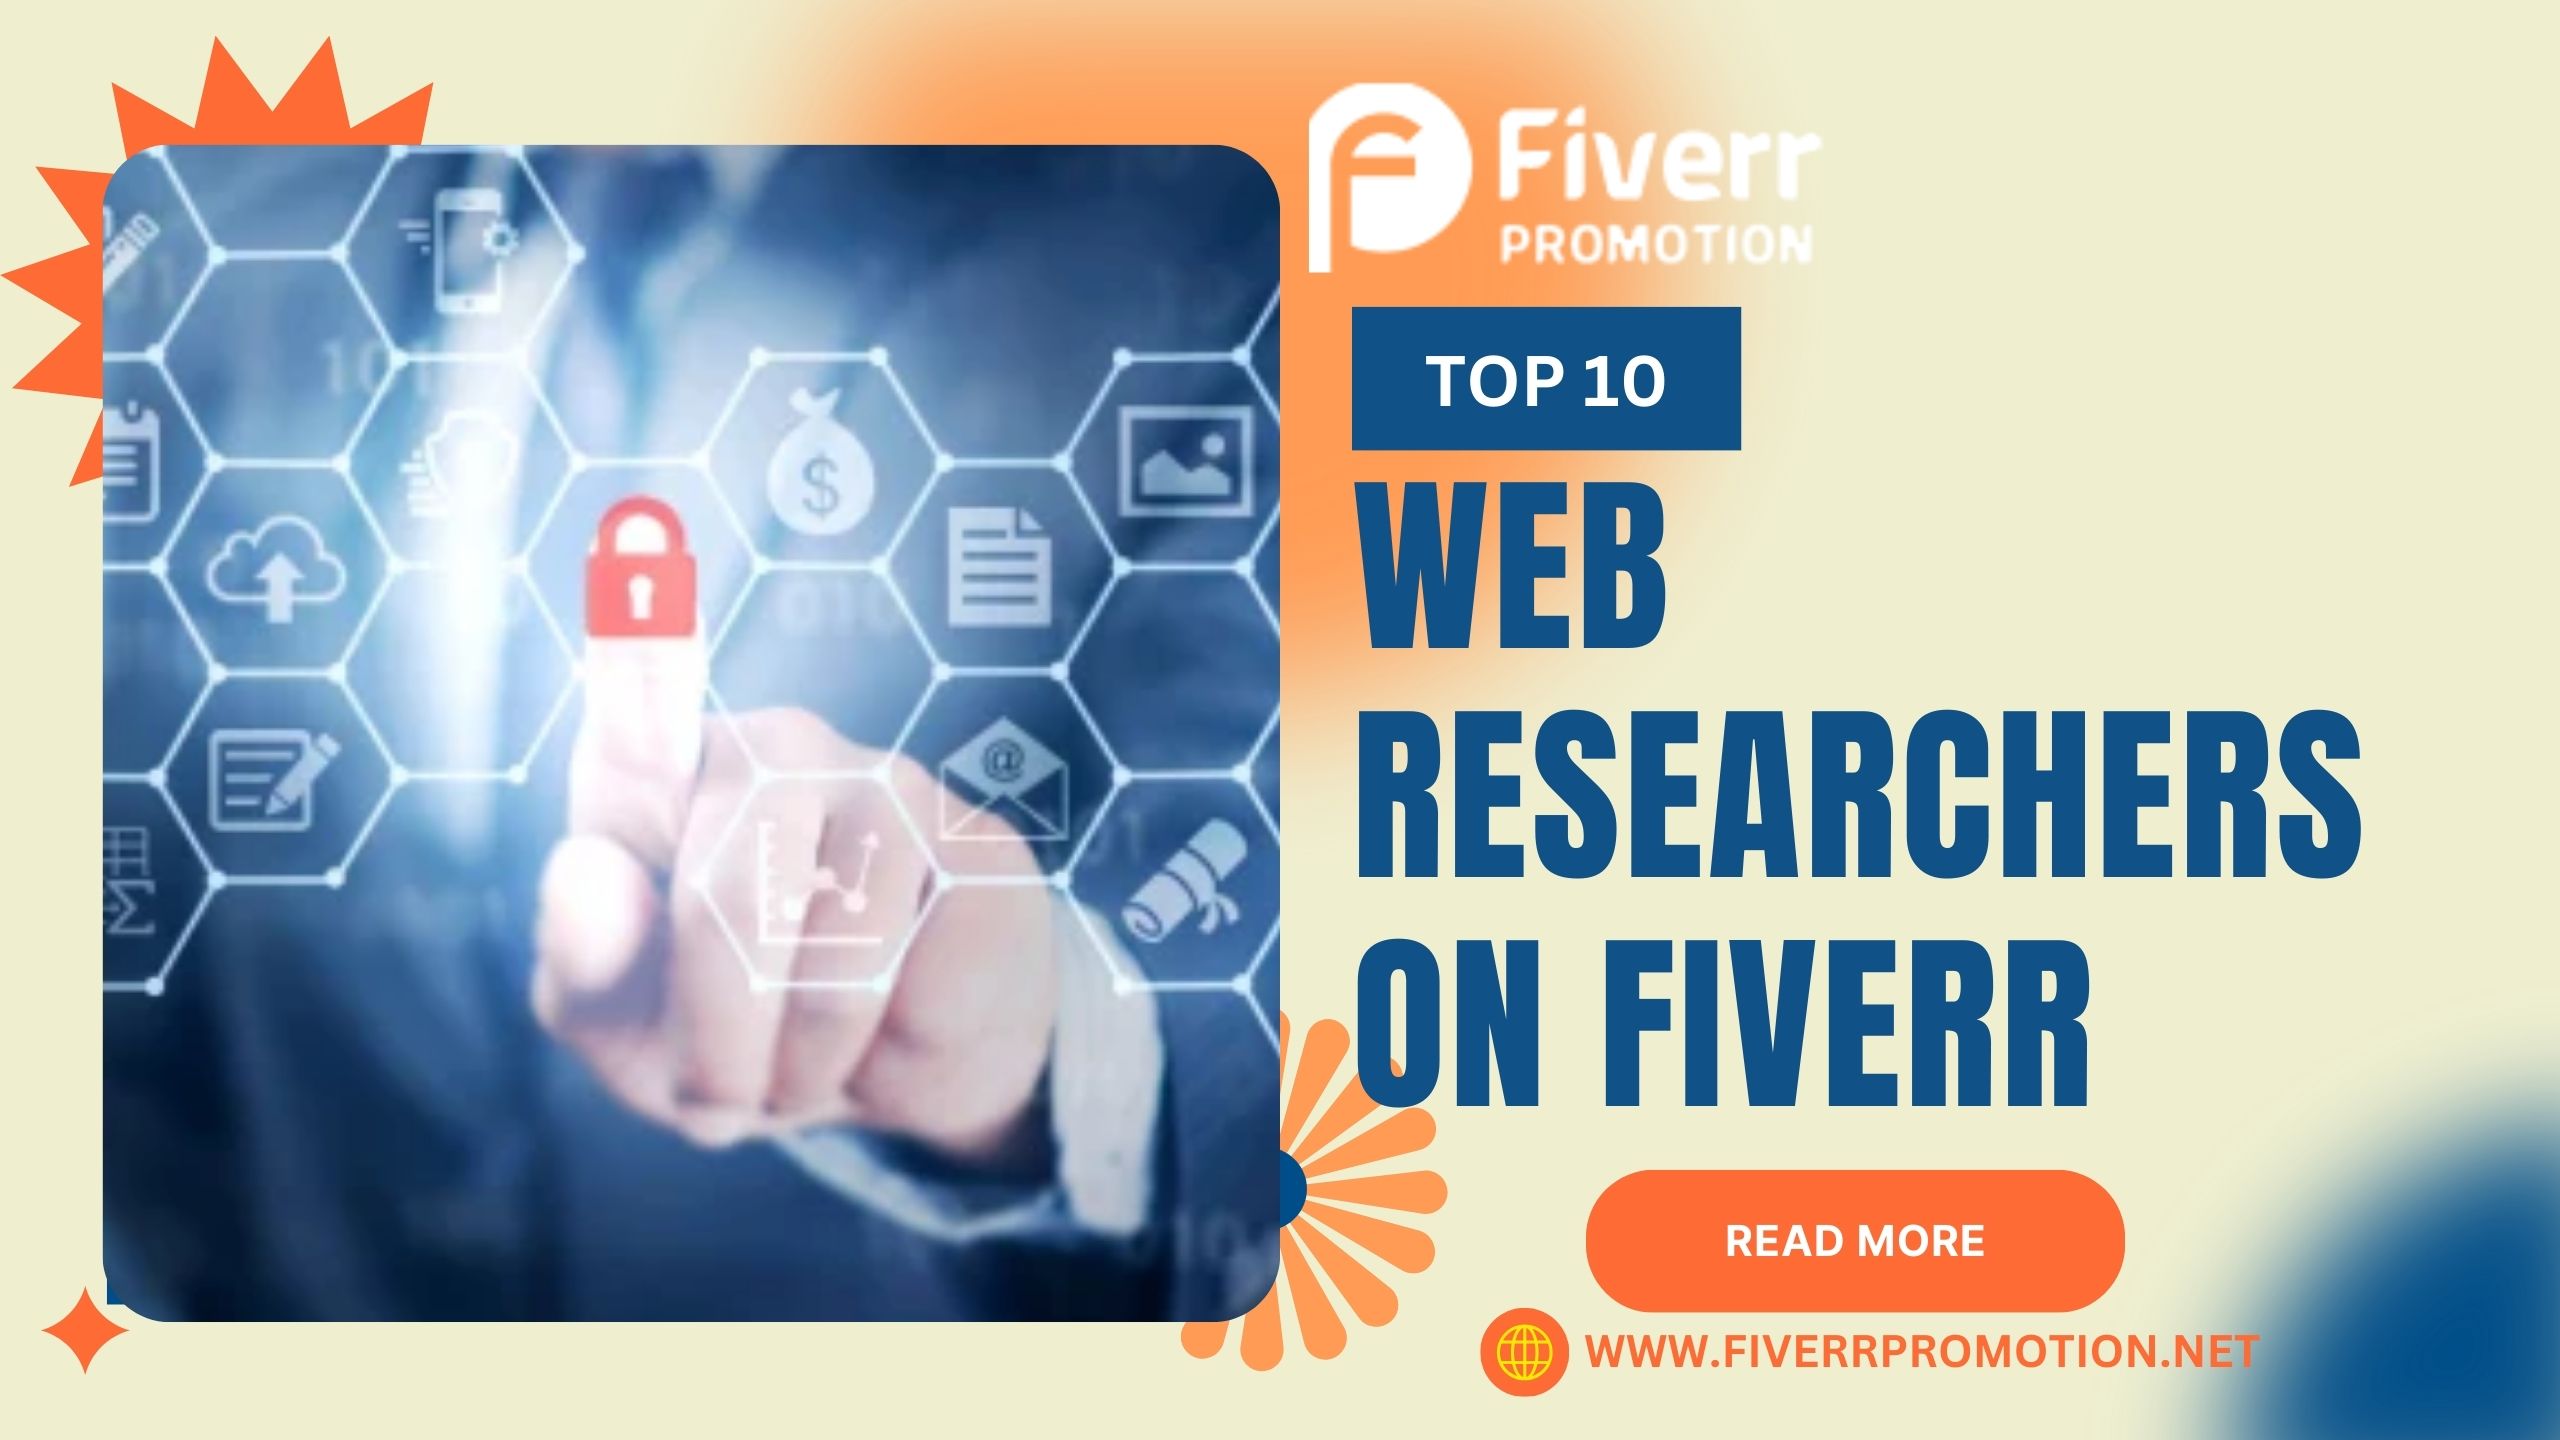 Top 10 Web Researchers on Fiverr